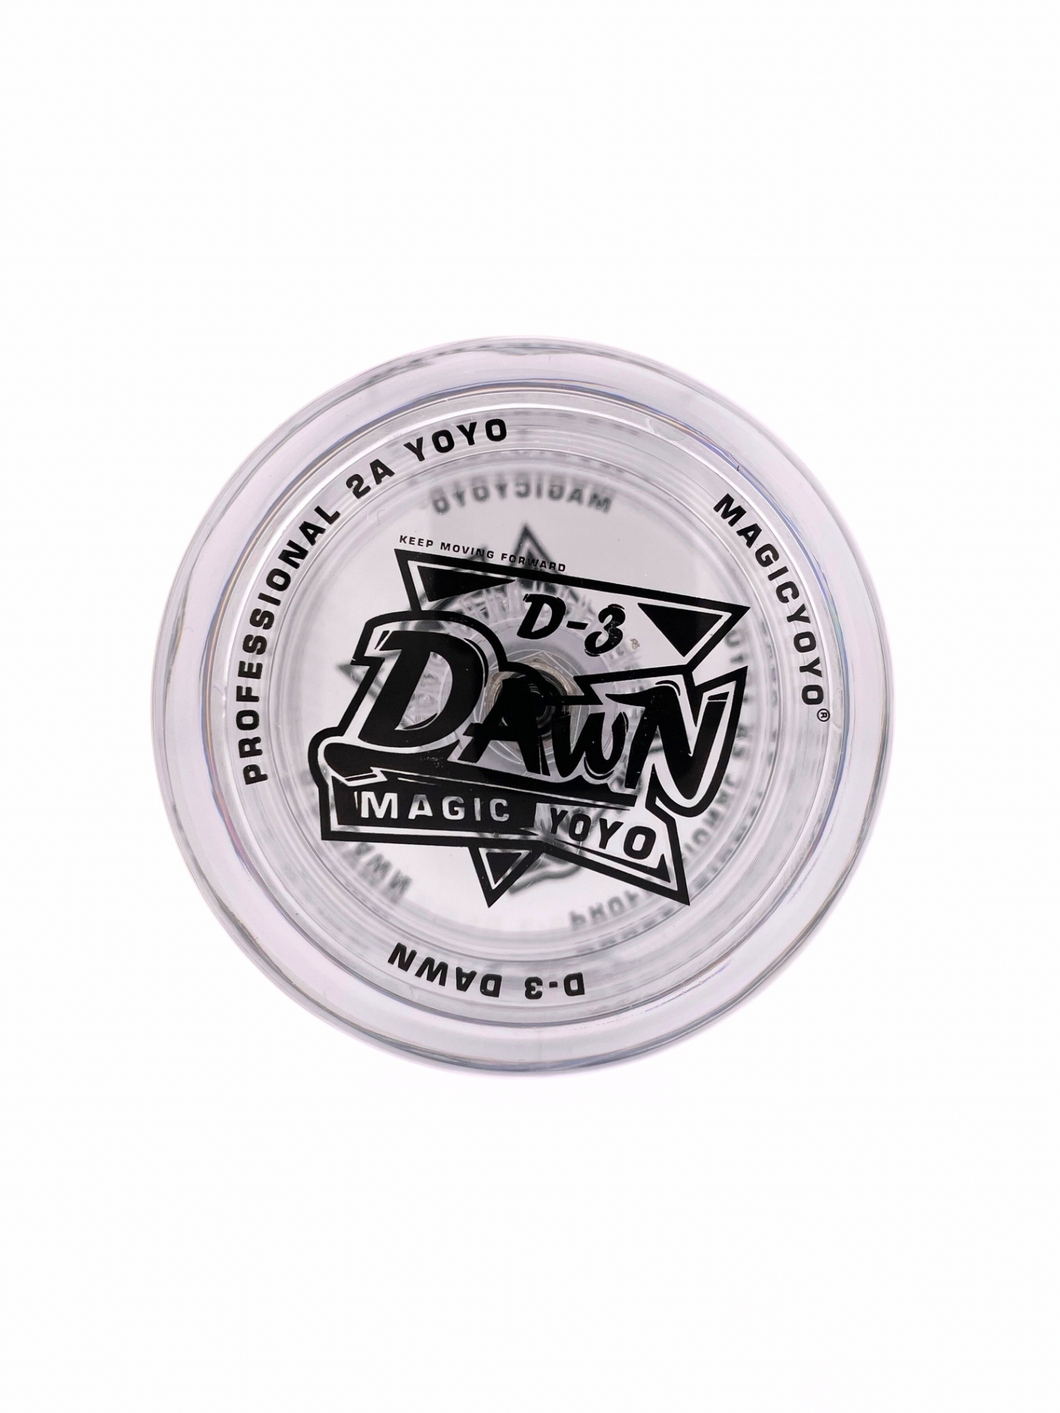 MagicYOYO D3 Dawn